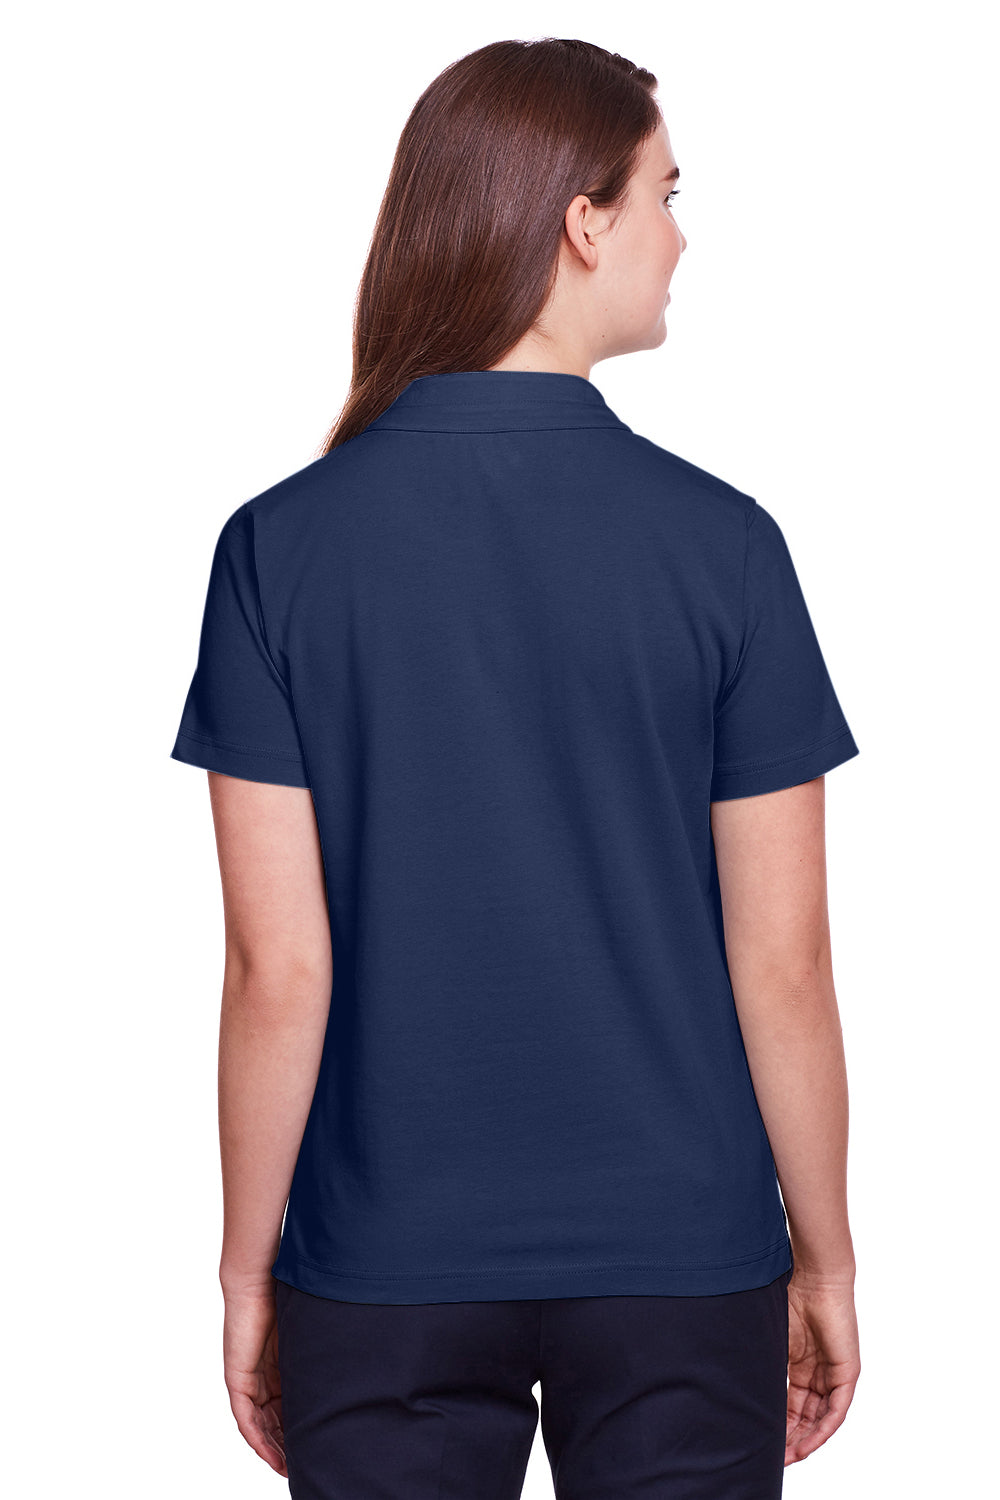 UltraClub UC105W Womens Lakeshore Performance Moisture Wicking Short Sleeve Polo Shirt Navy Blue Back